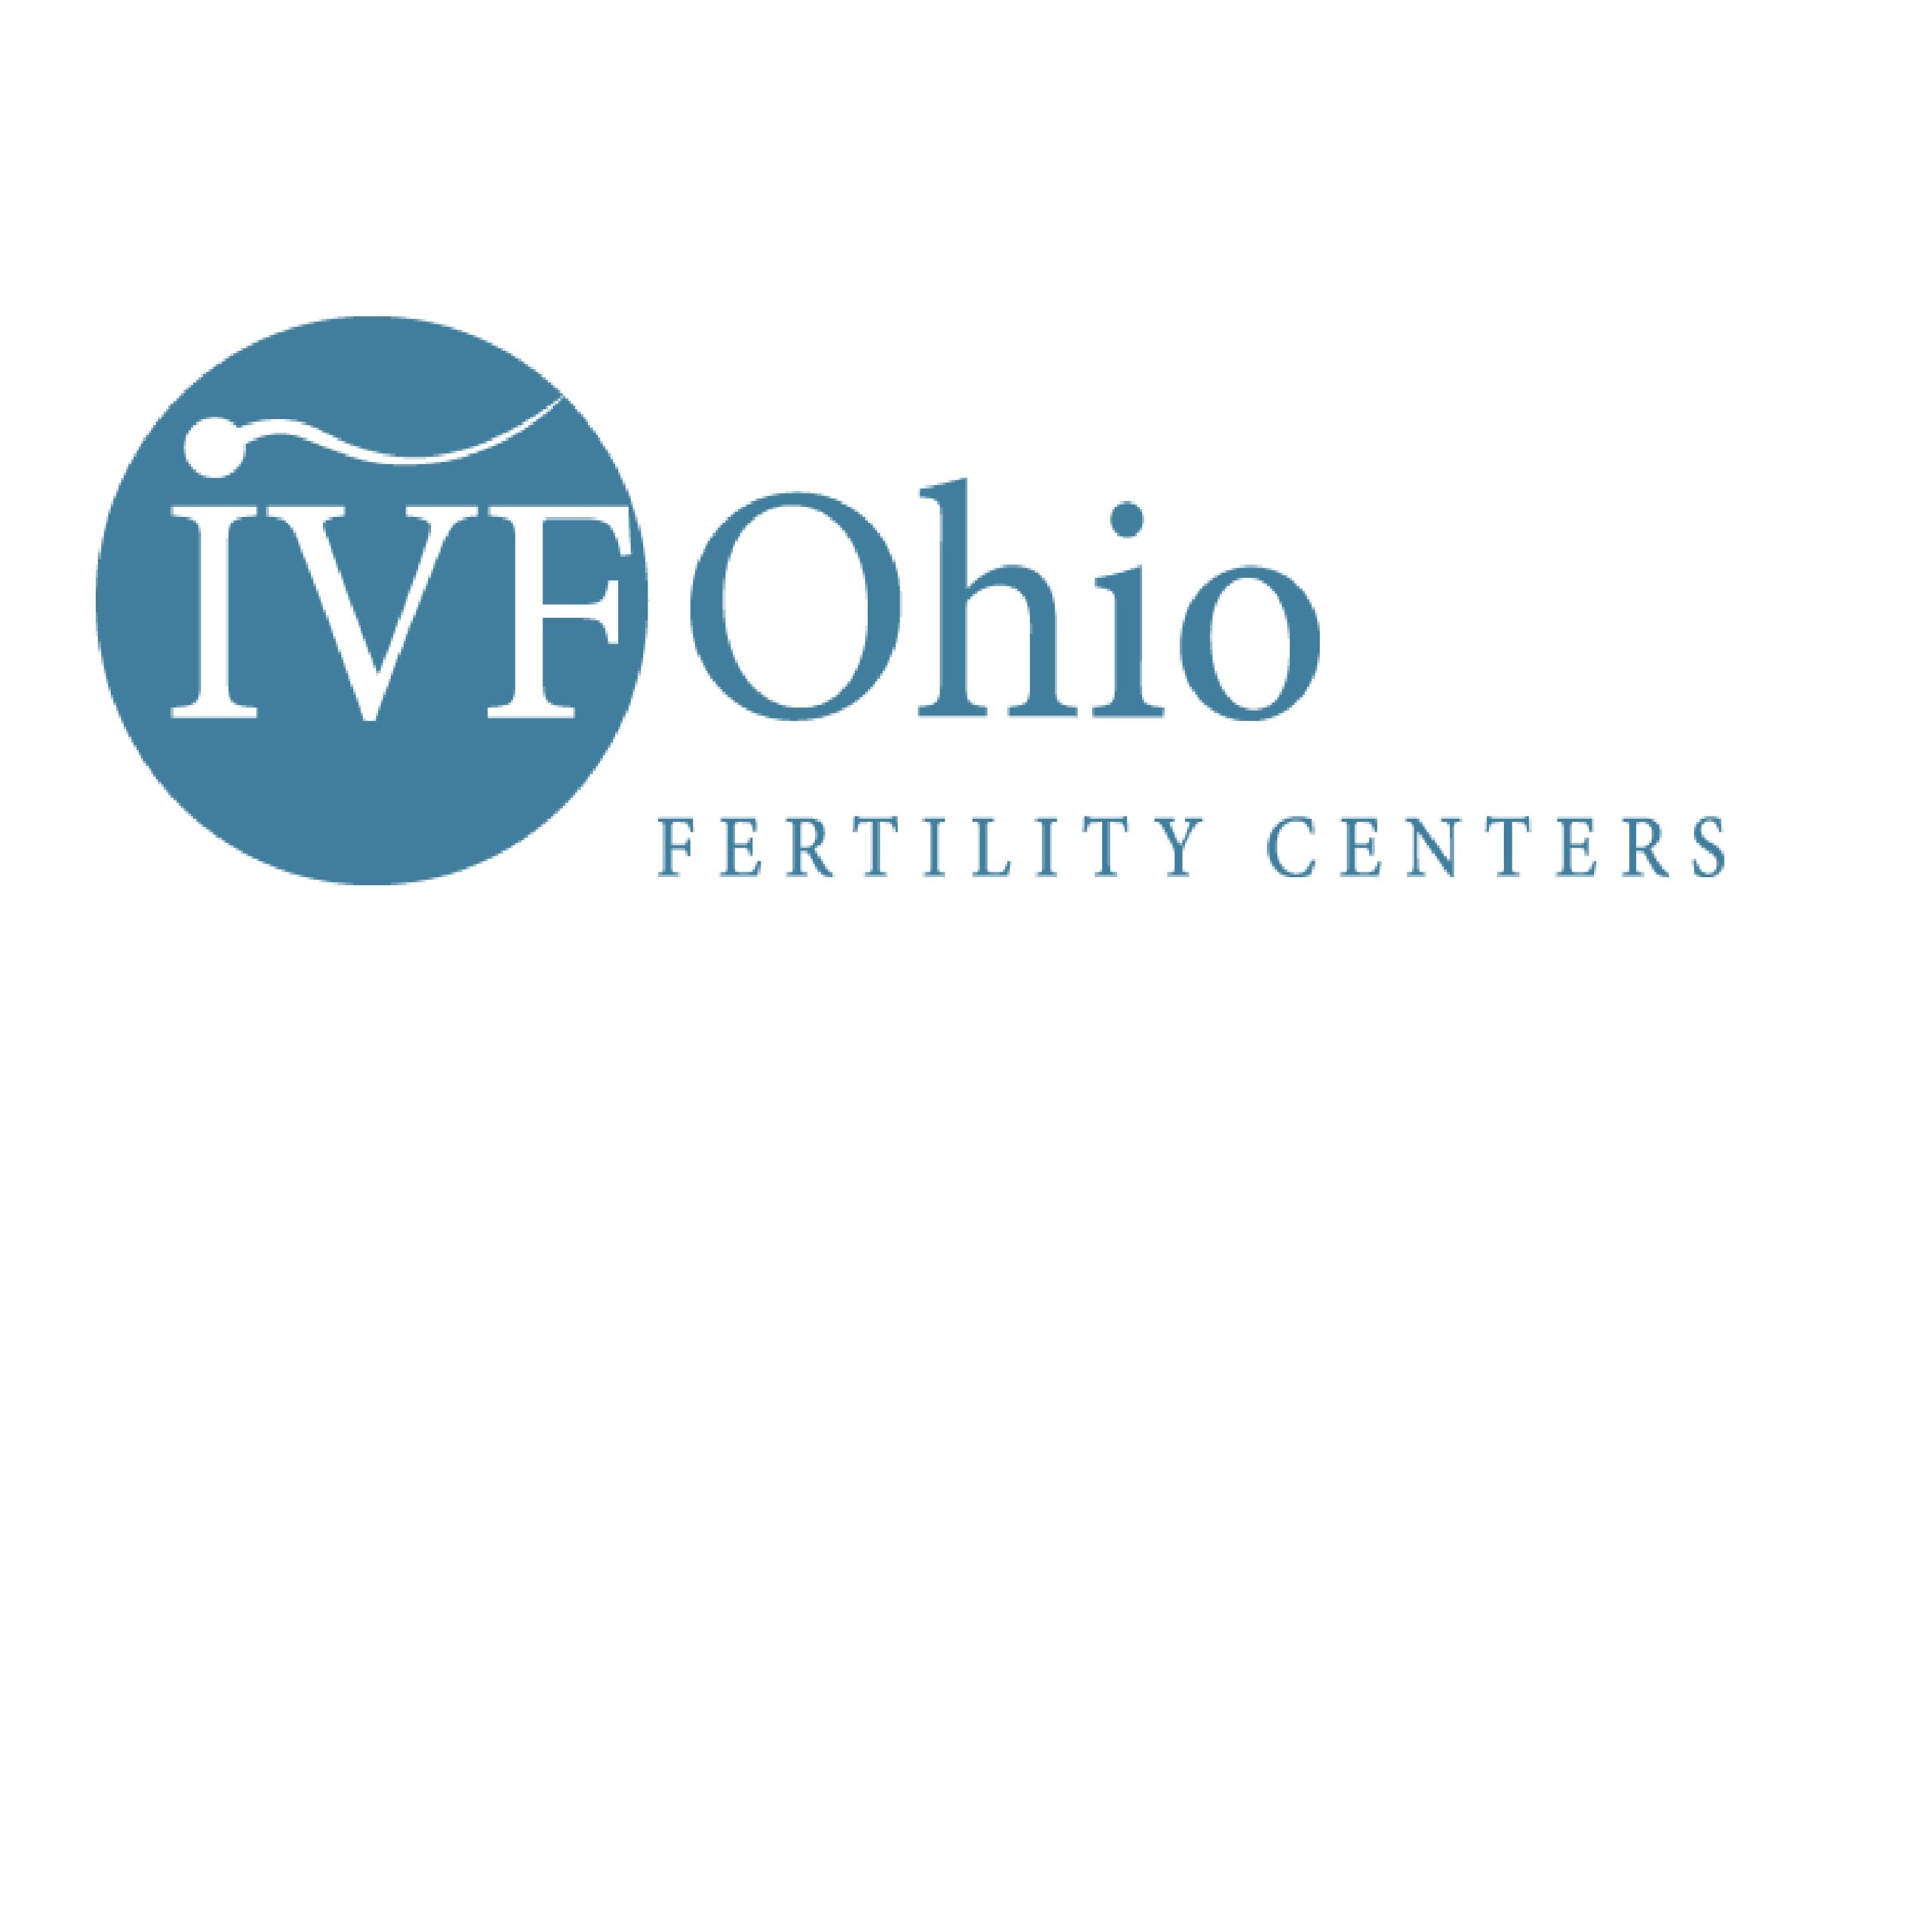 IVF Ohio Fertility Center 